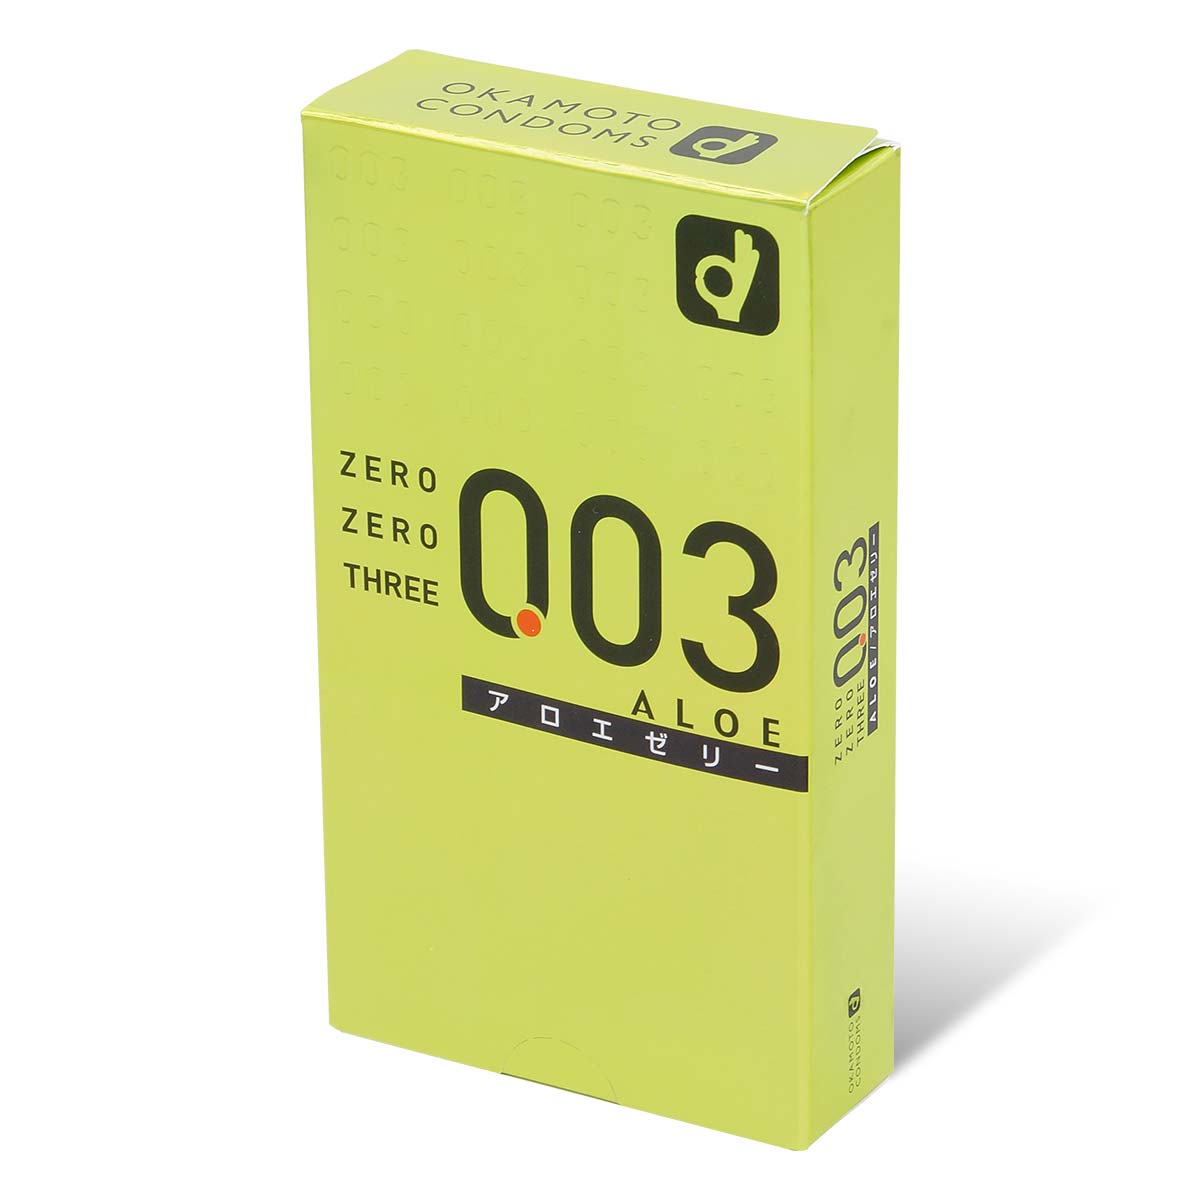 Zero Zero Three 0.03 Aloe (Japan Edition) 10's Pack Latex Condom-p_1